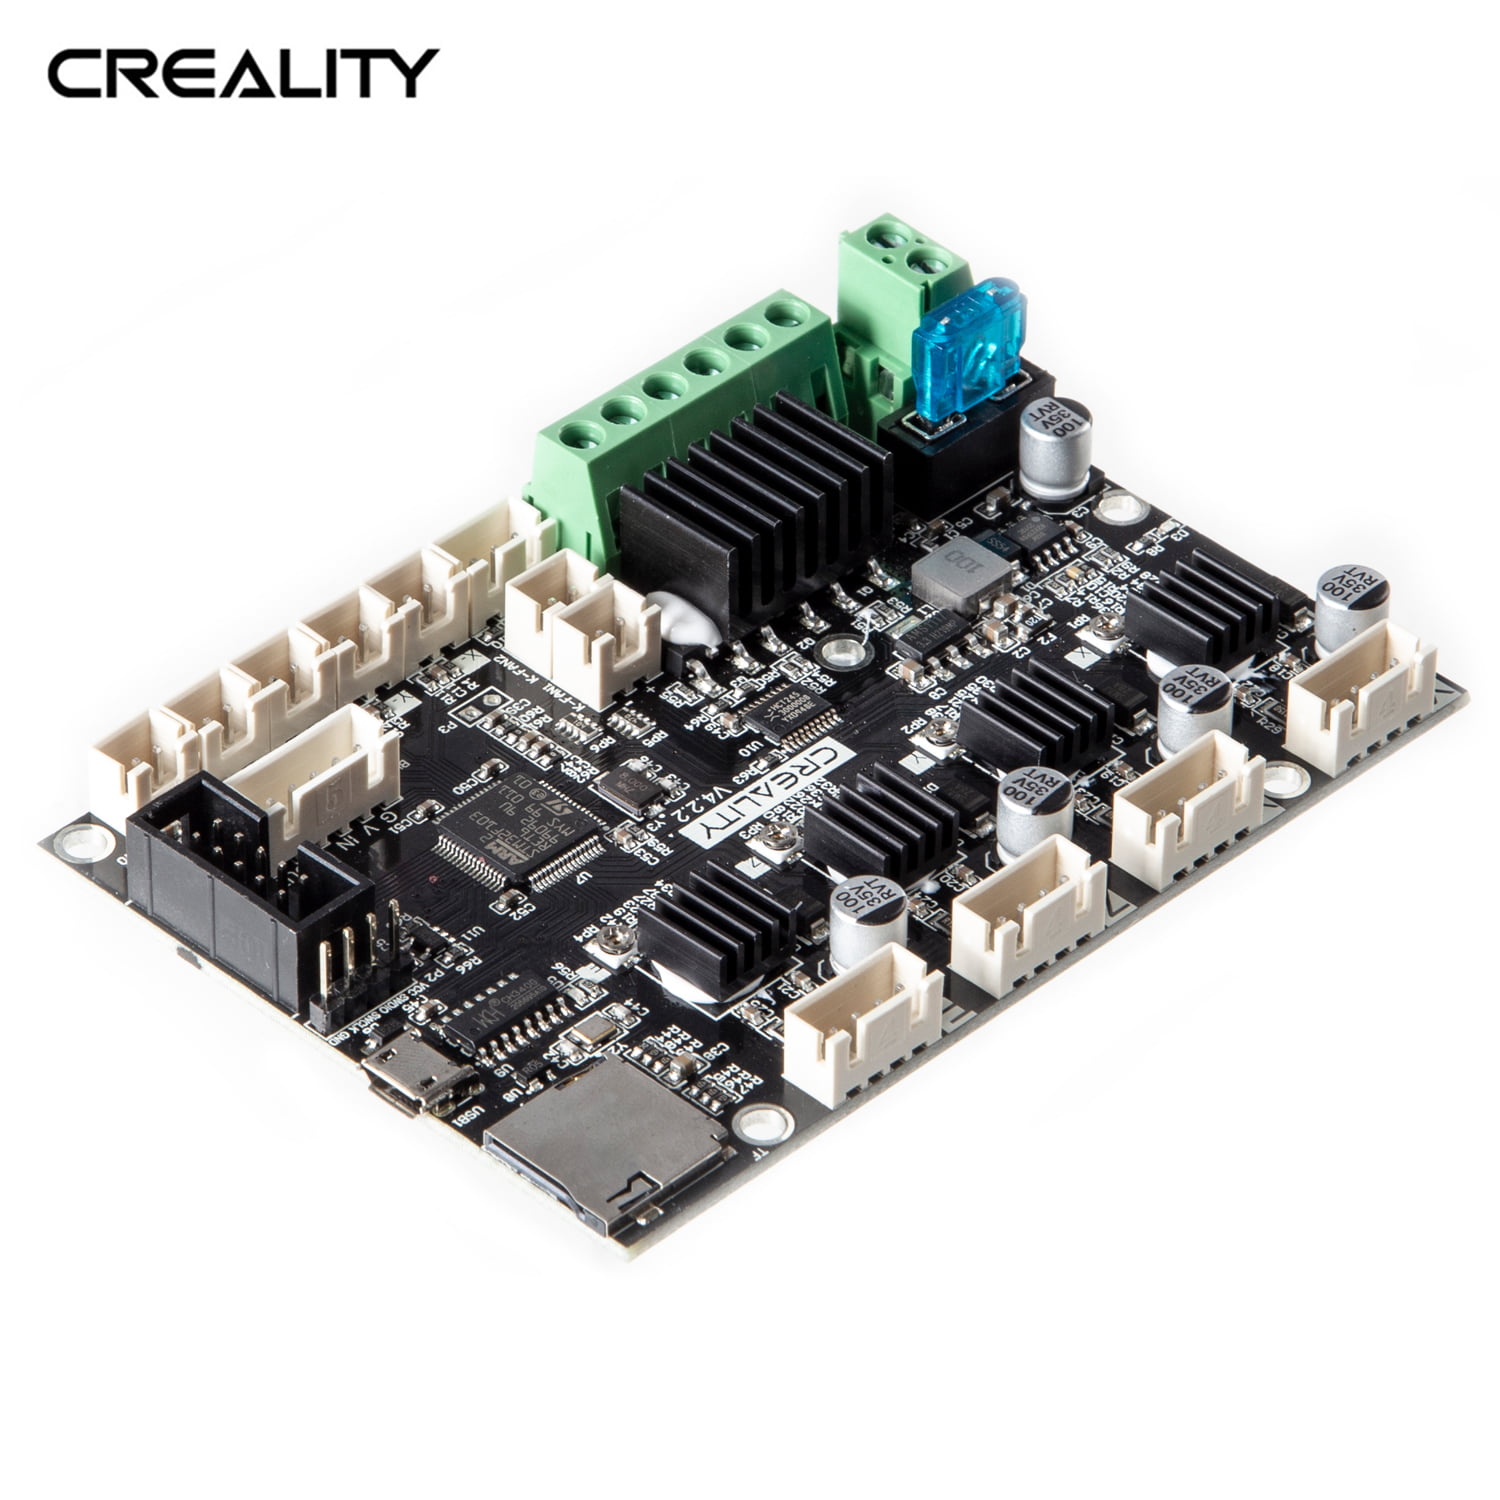 Creality V1.1.5 Silent Board Mainboard Control 24V For Ender 3/3 Pro 3D Printer 